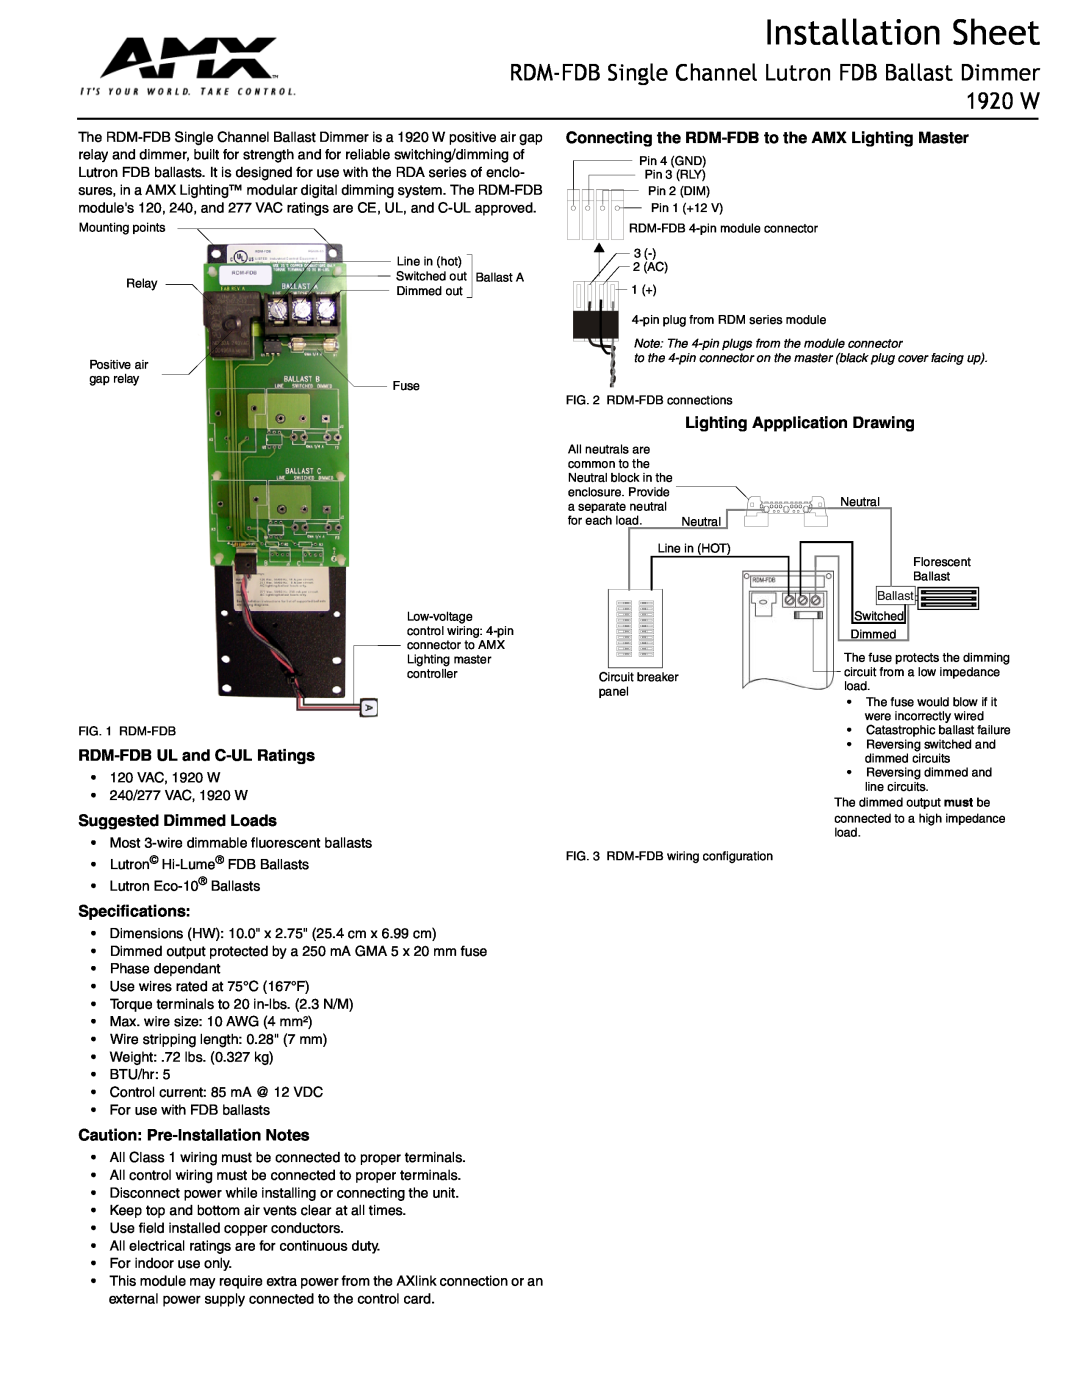 AMX specifications Installation Sheet, RDM-FDB Single Channel Lutron FDB Ballast Dimmer 1920 W, Suggested Dimmed Loads 